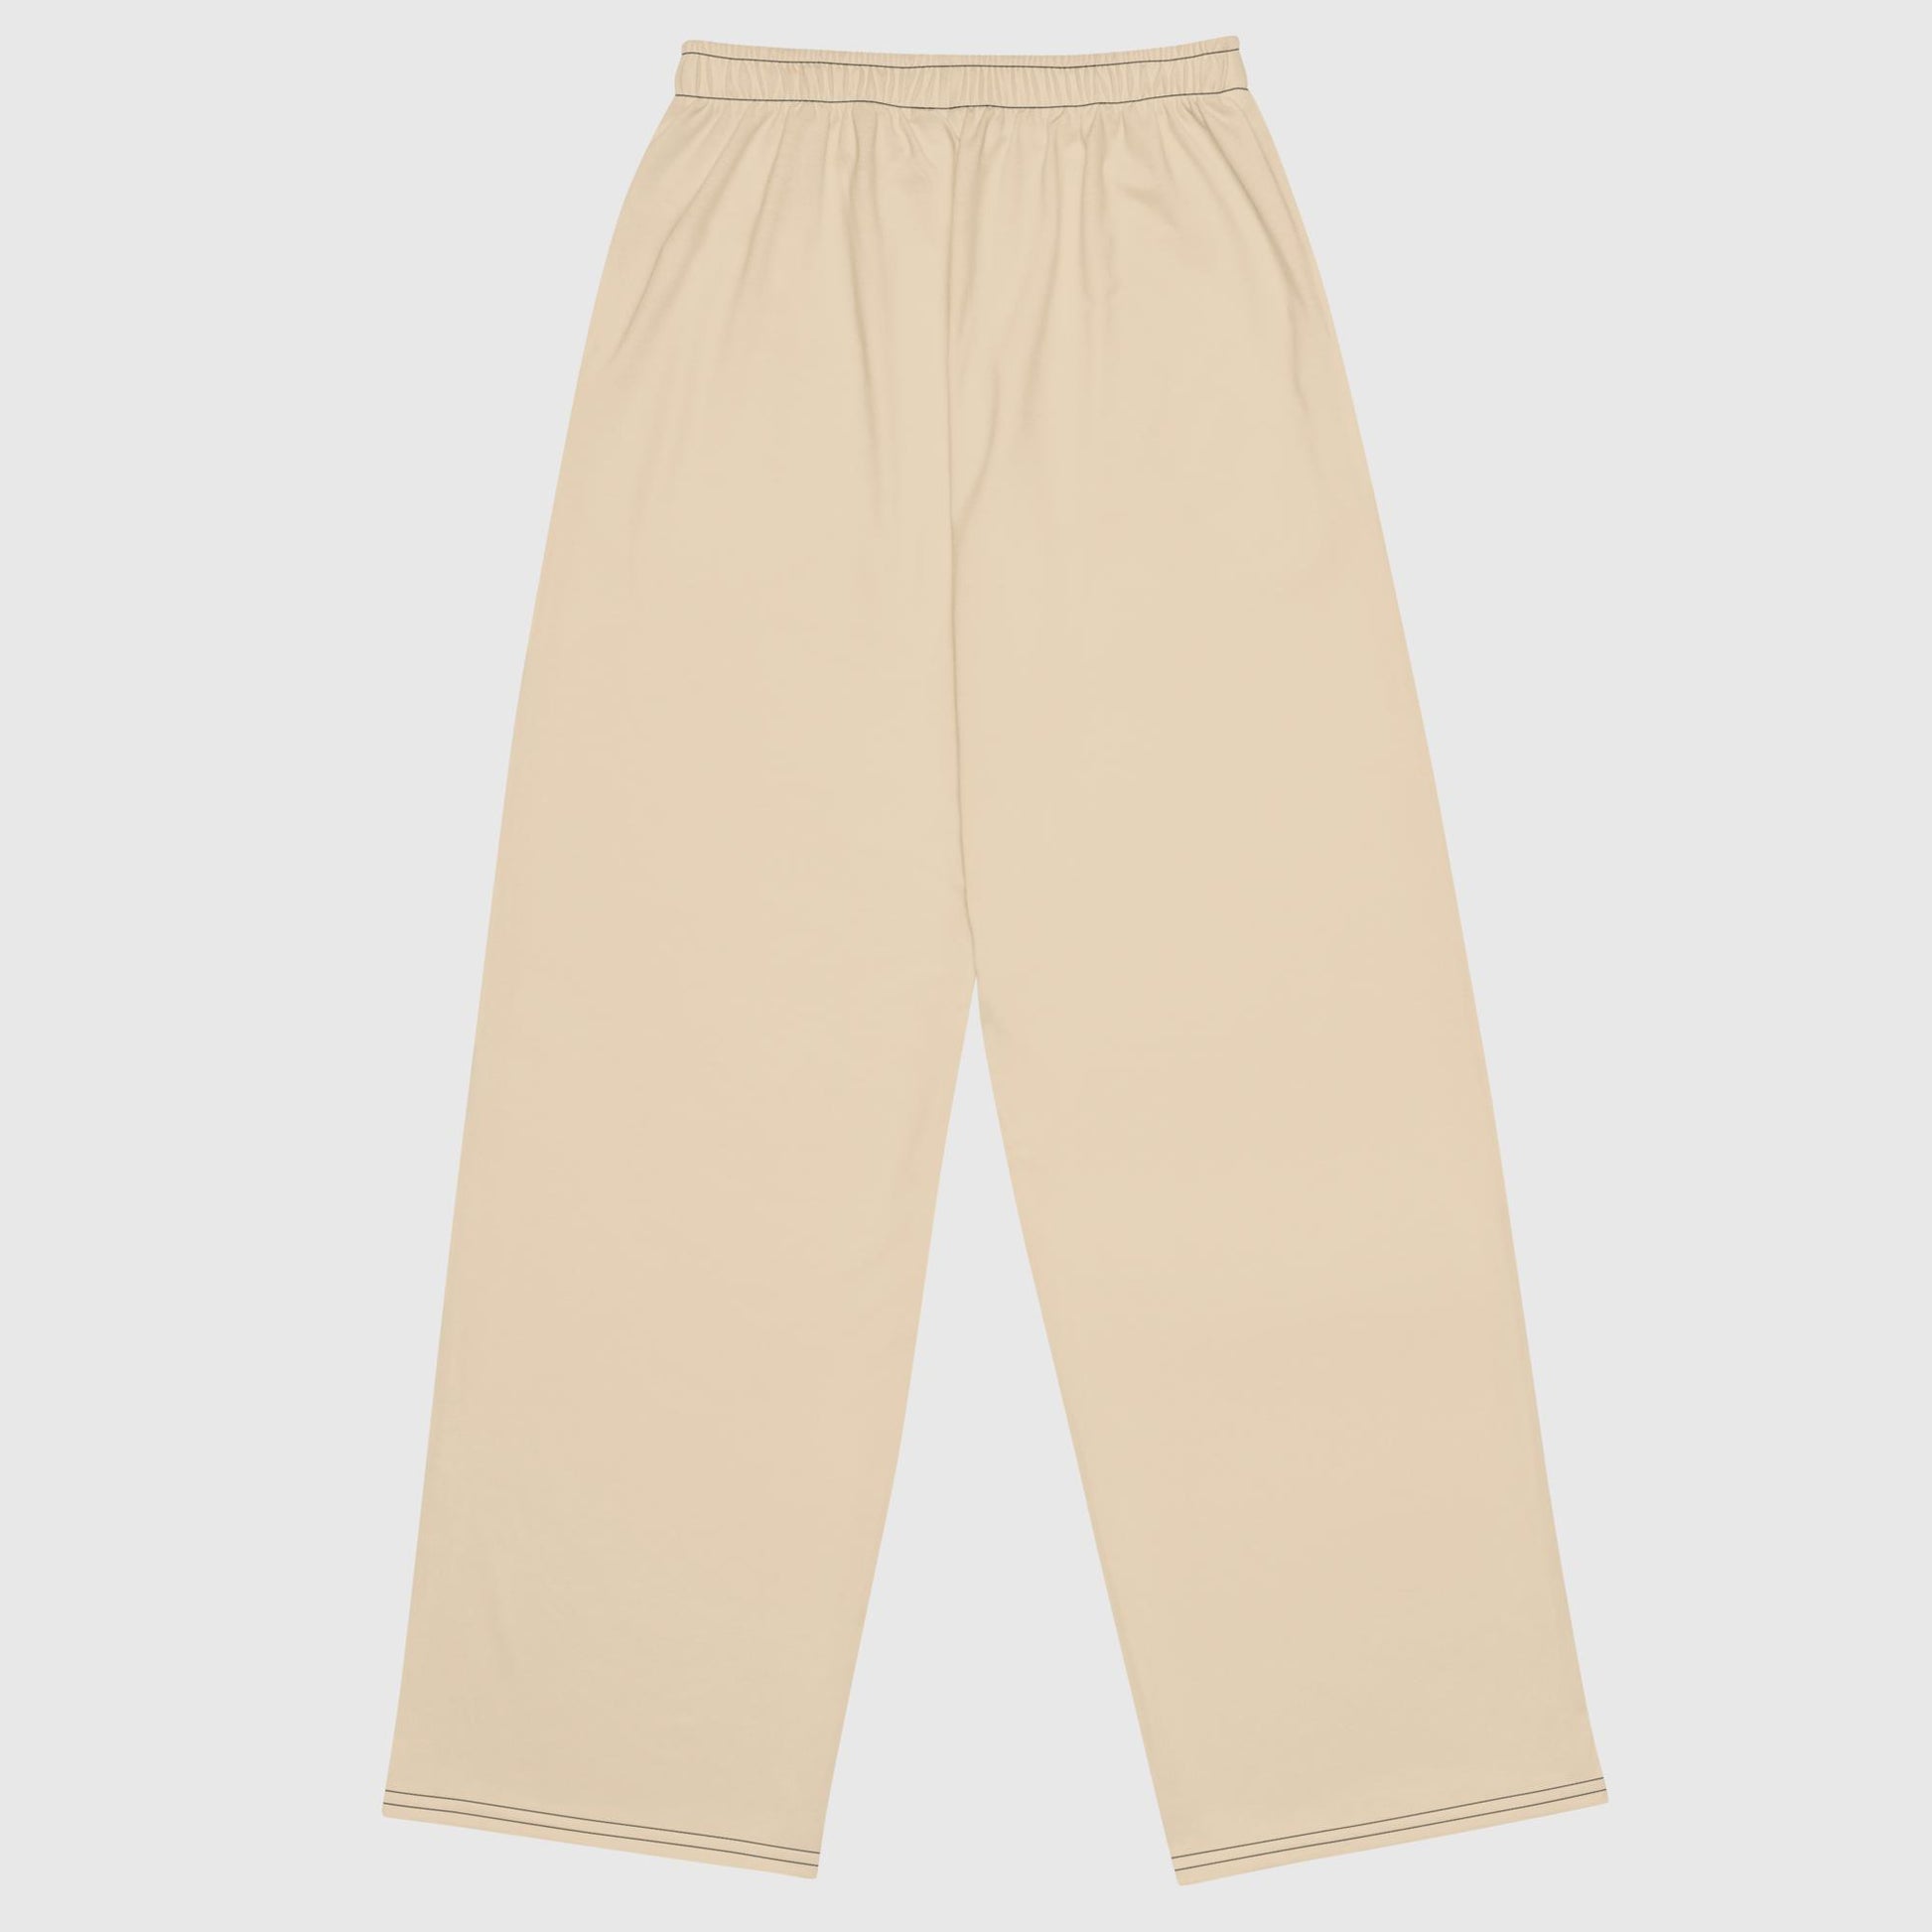 Women's wide-leg pants - Cream - Sunset Harbor Clothing